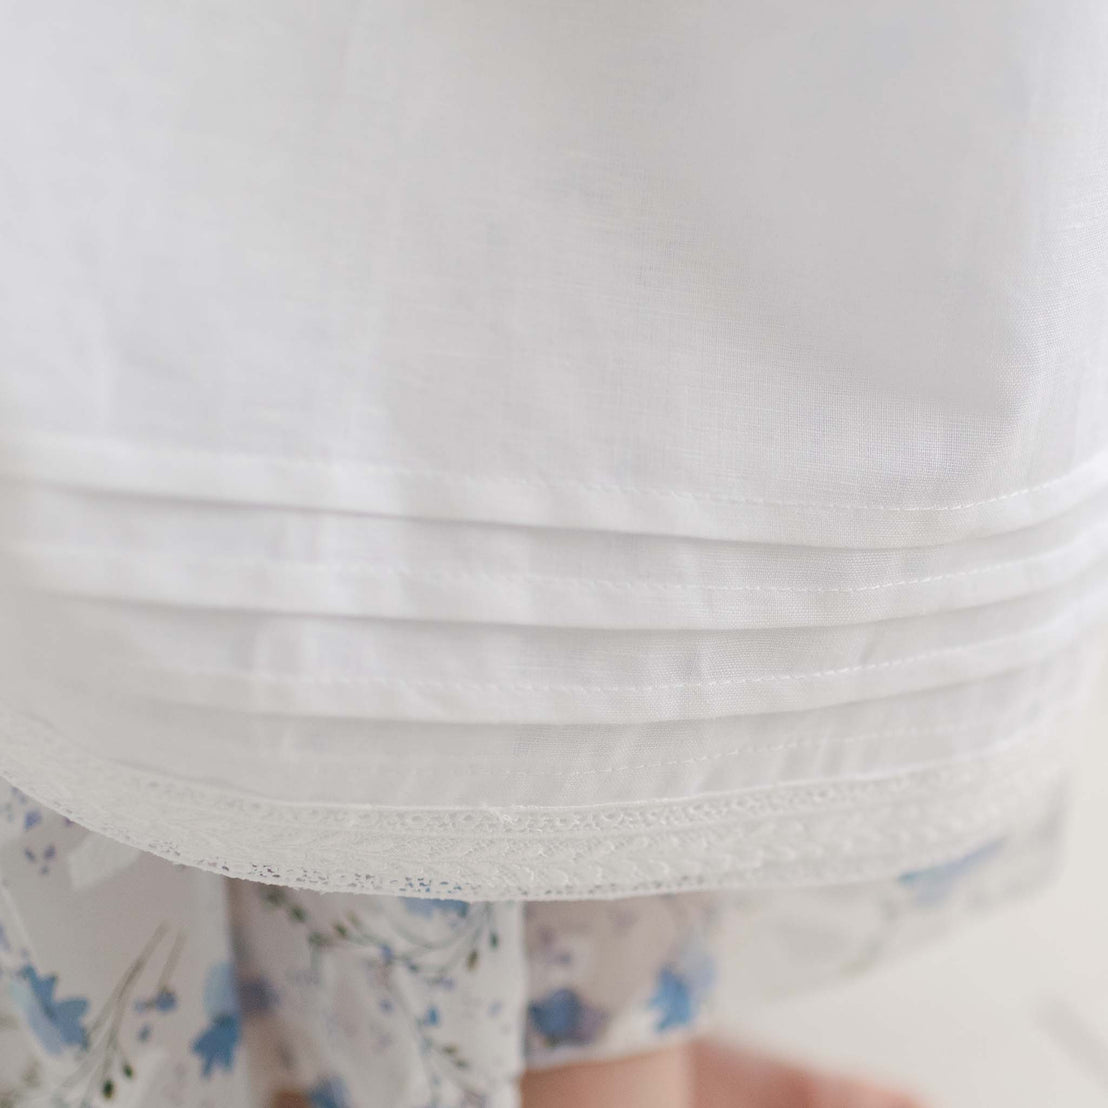 Flat lay photo of the ivory Oliver Convertible Skirt showcasing the hem detail on the white linen skirt.